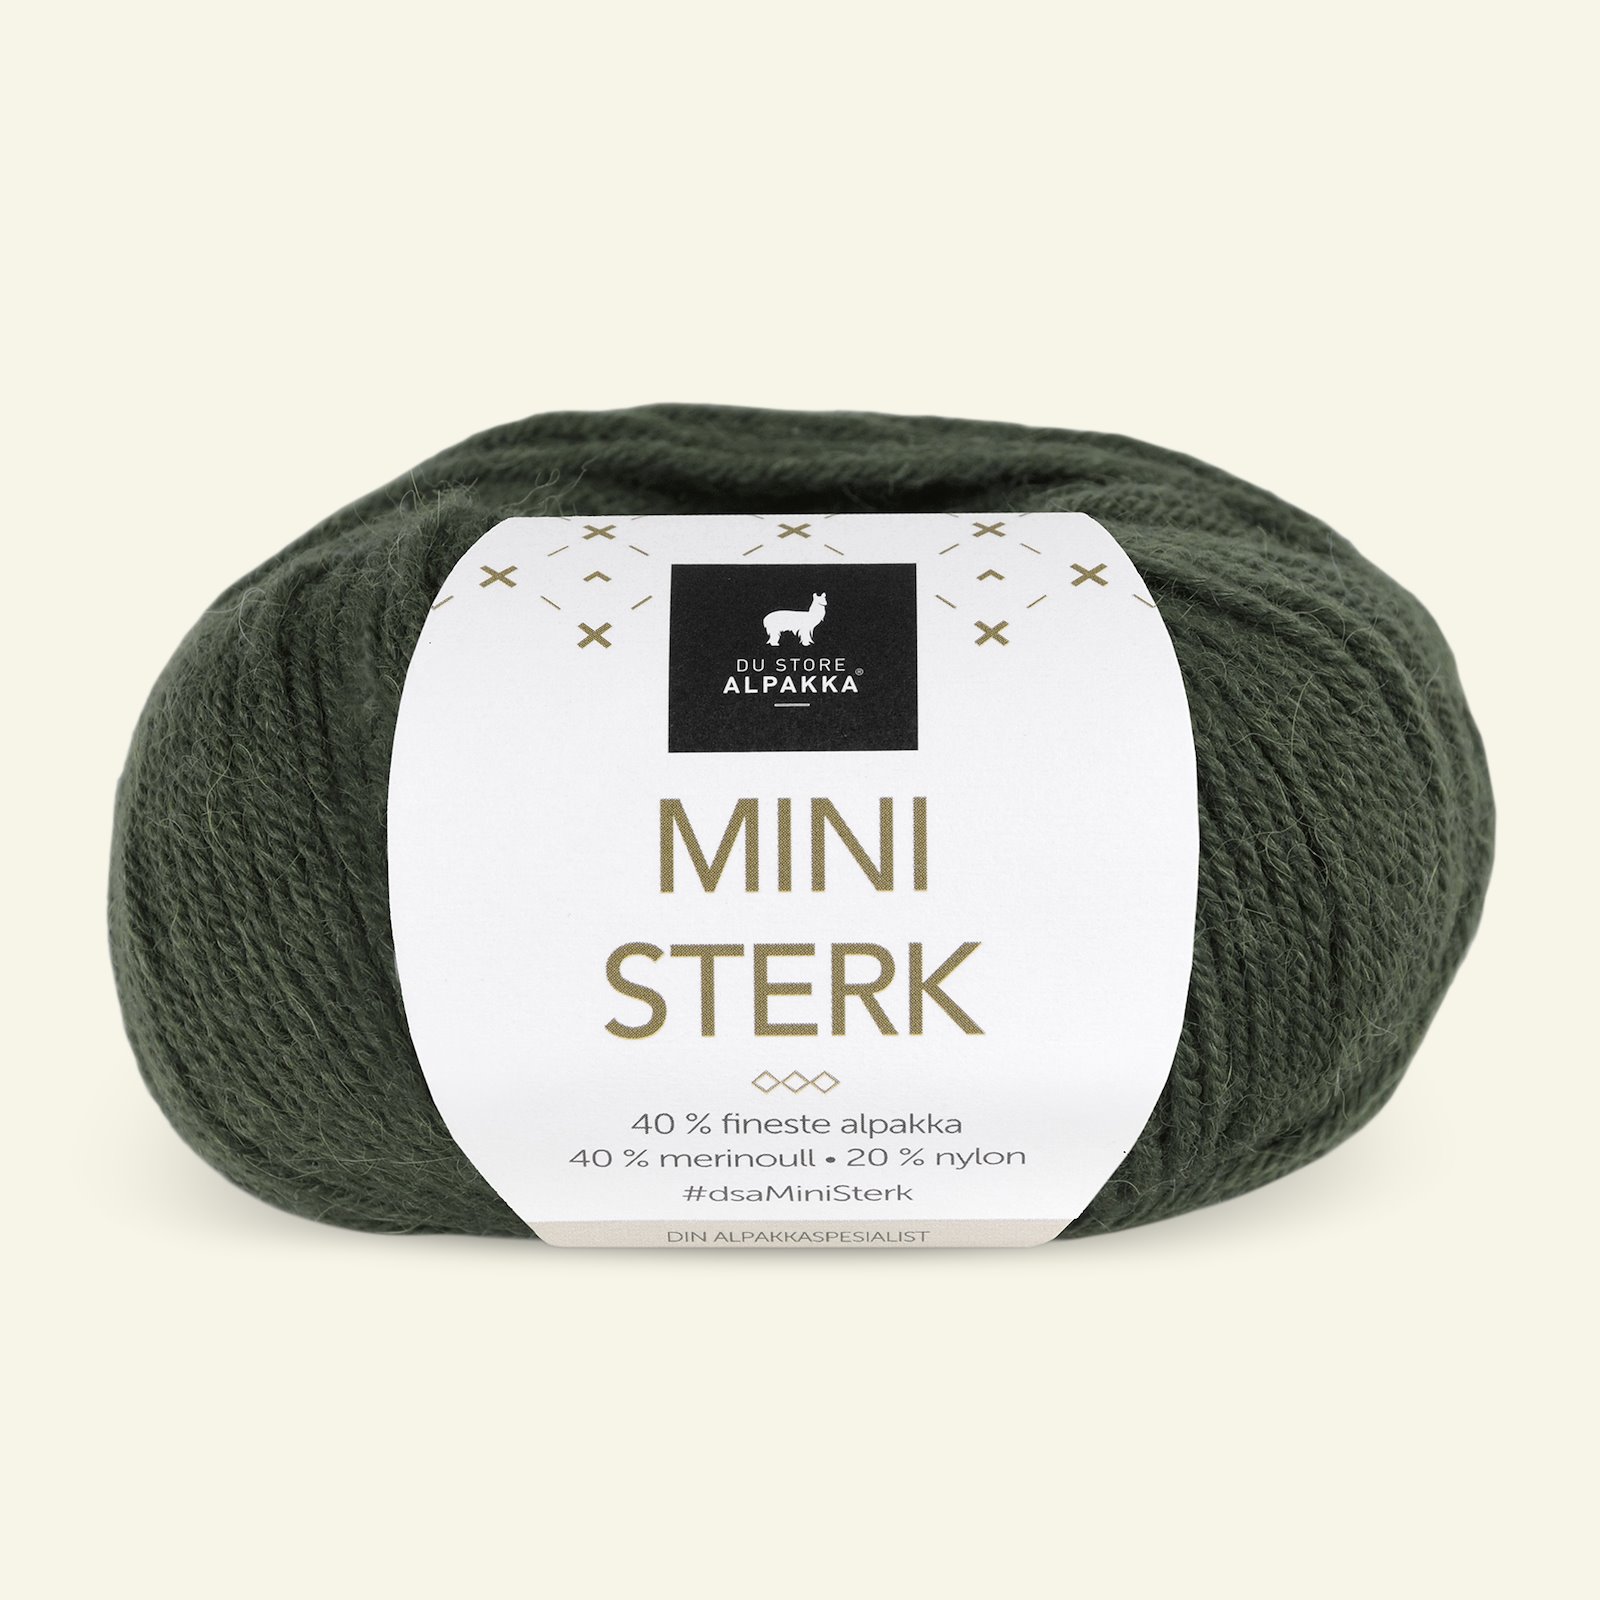 Du Store Alpakka,alpaca merino mixed yarn "Mini Sterk", bottle green (860) 90000641_pack